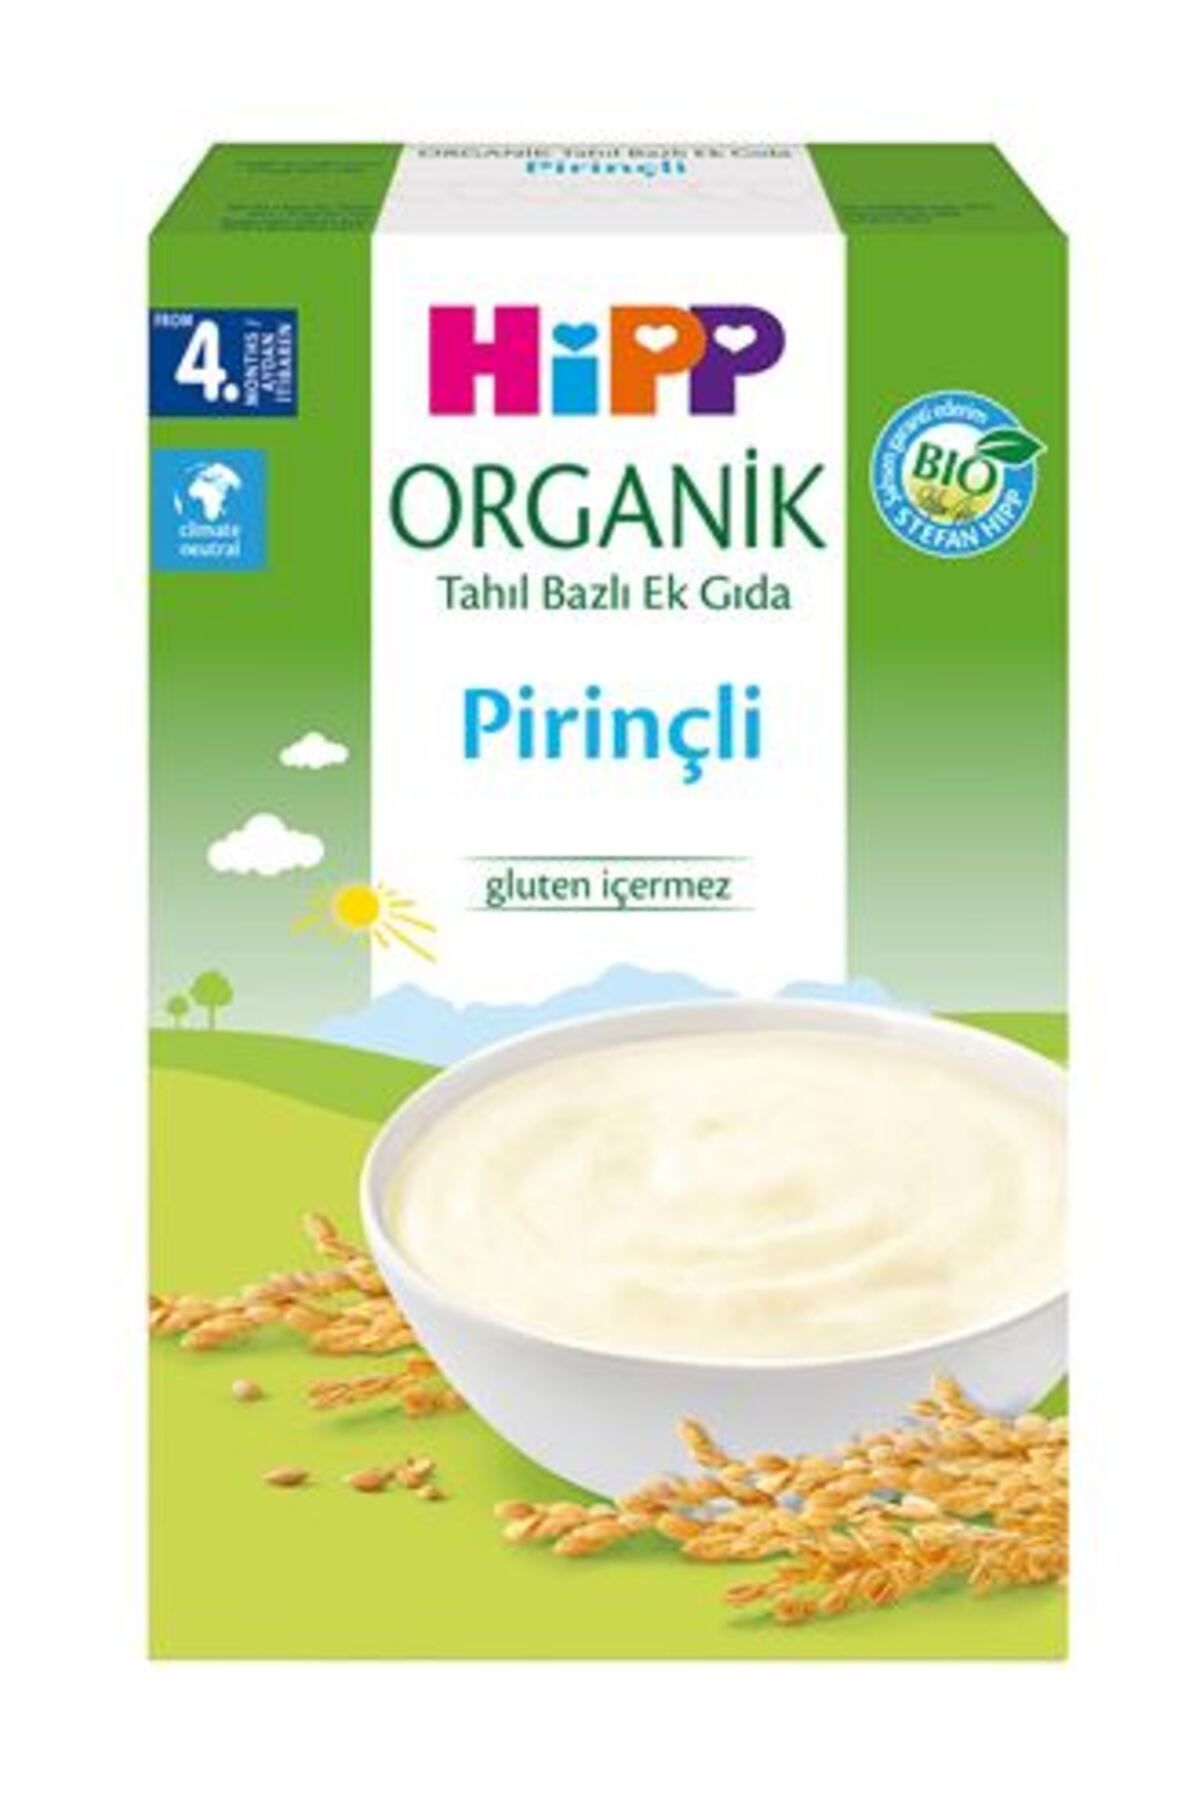 Hipp ( 1 ADET ) Hipp Organik Pirinçli Tahıl Bazlı Ek Gıda 200 gr